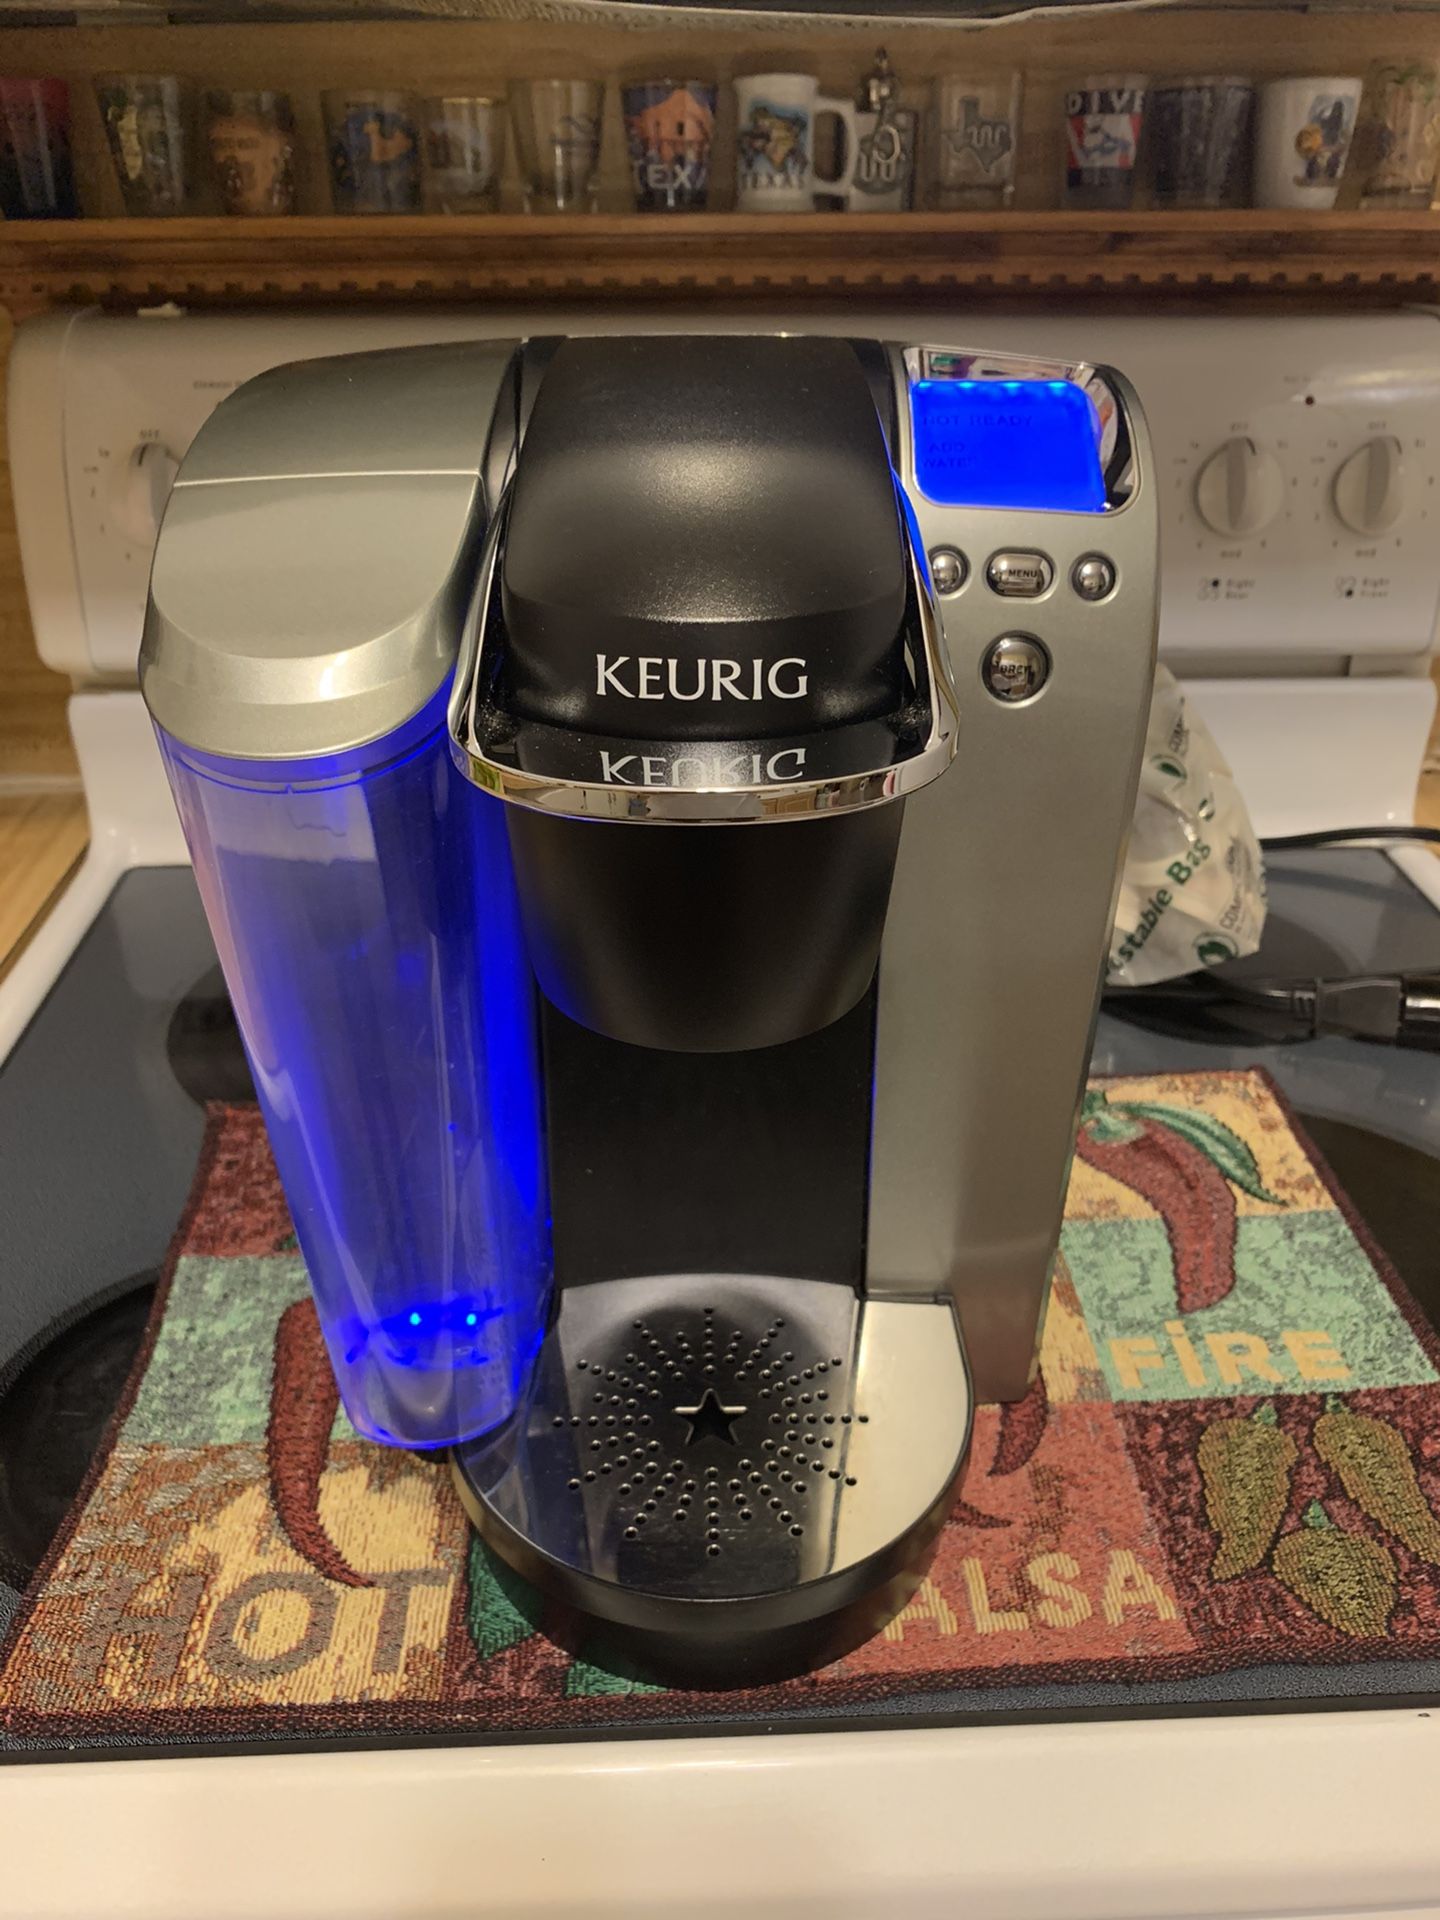 Keurig K70 Coffee maker plus filter and pods